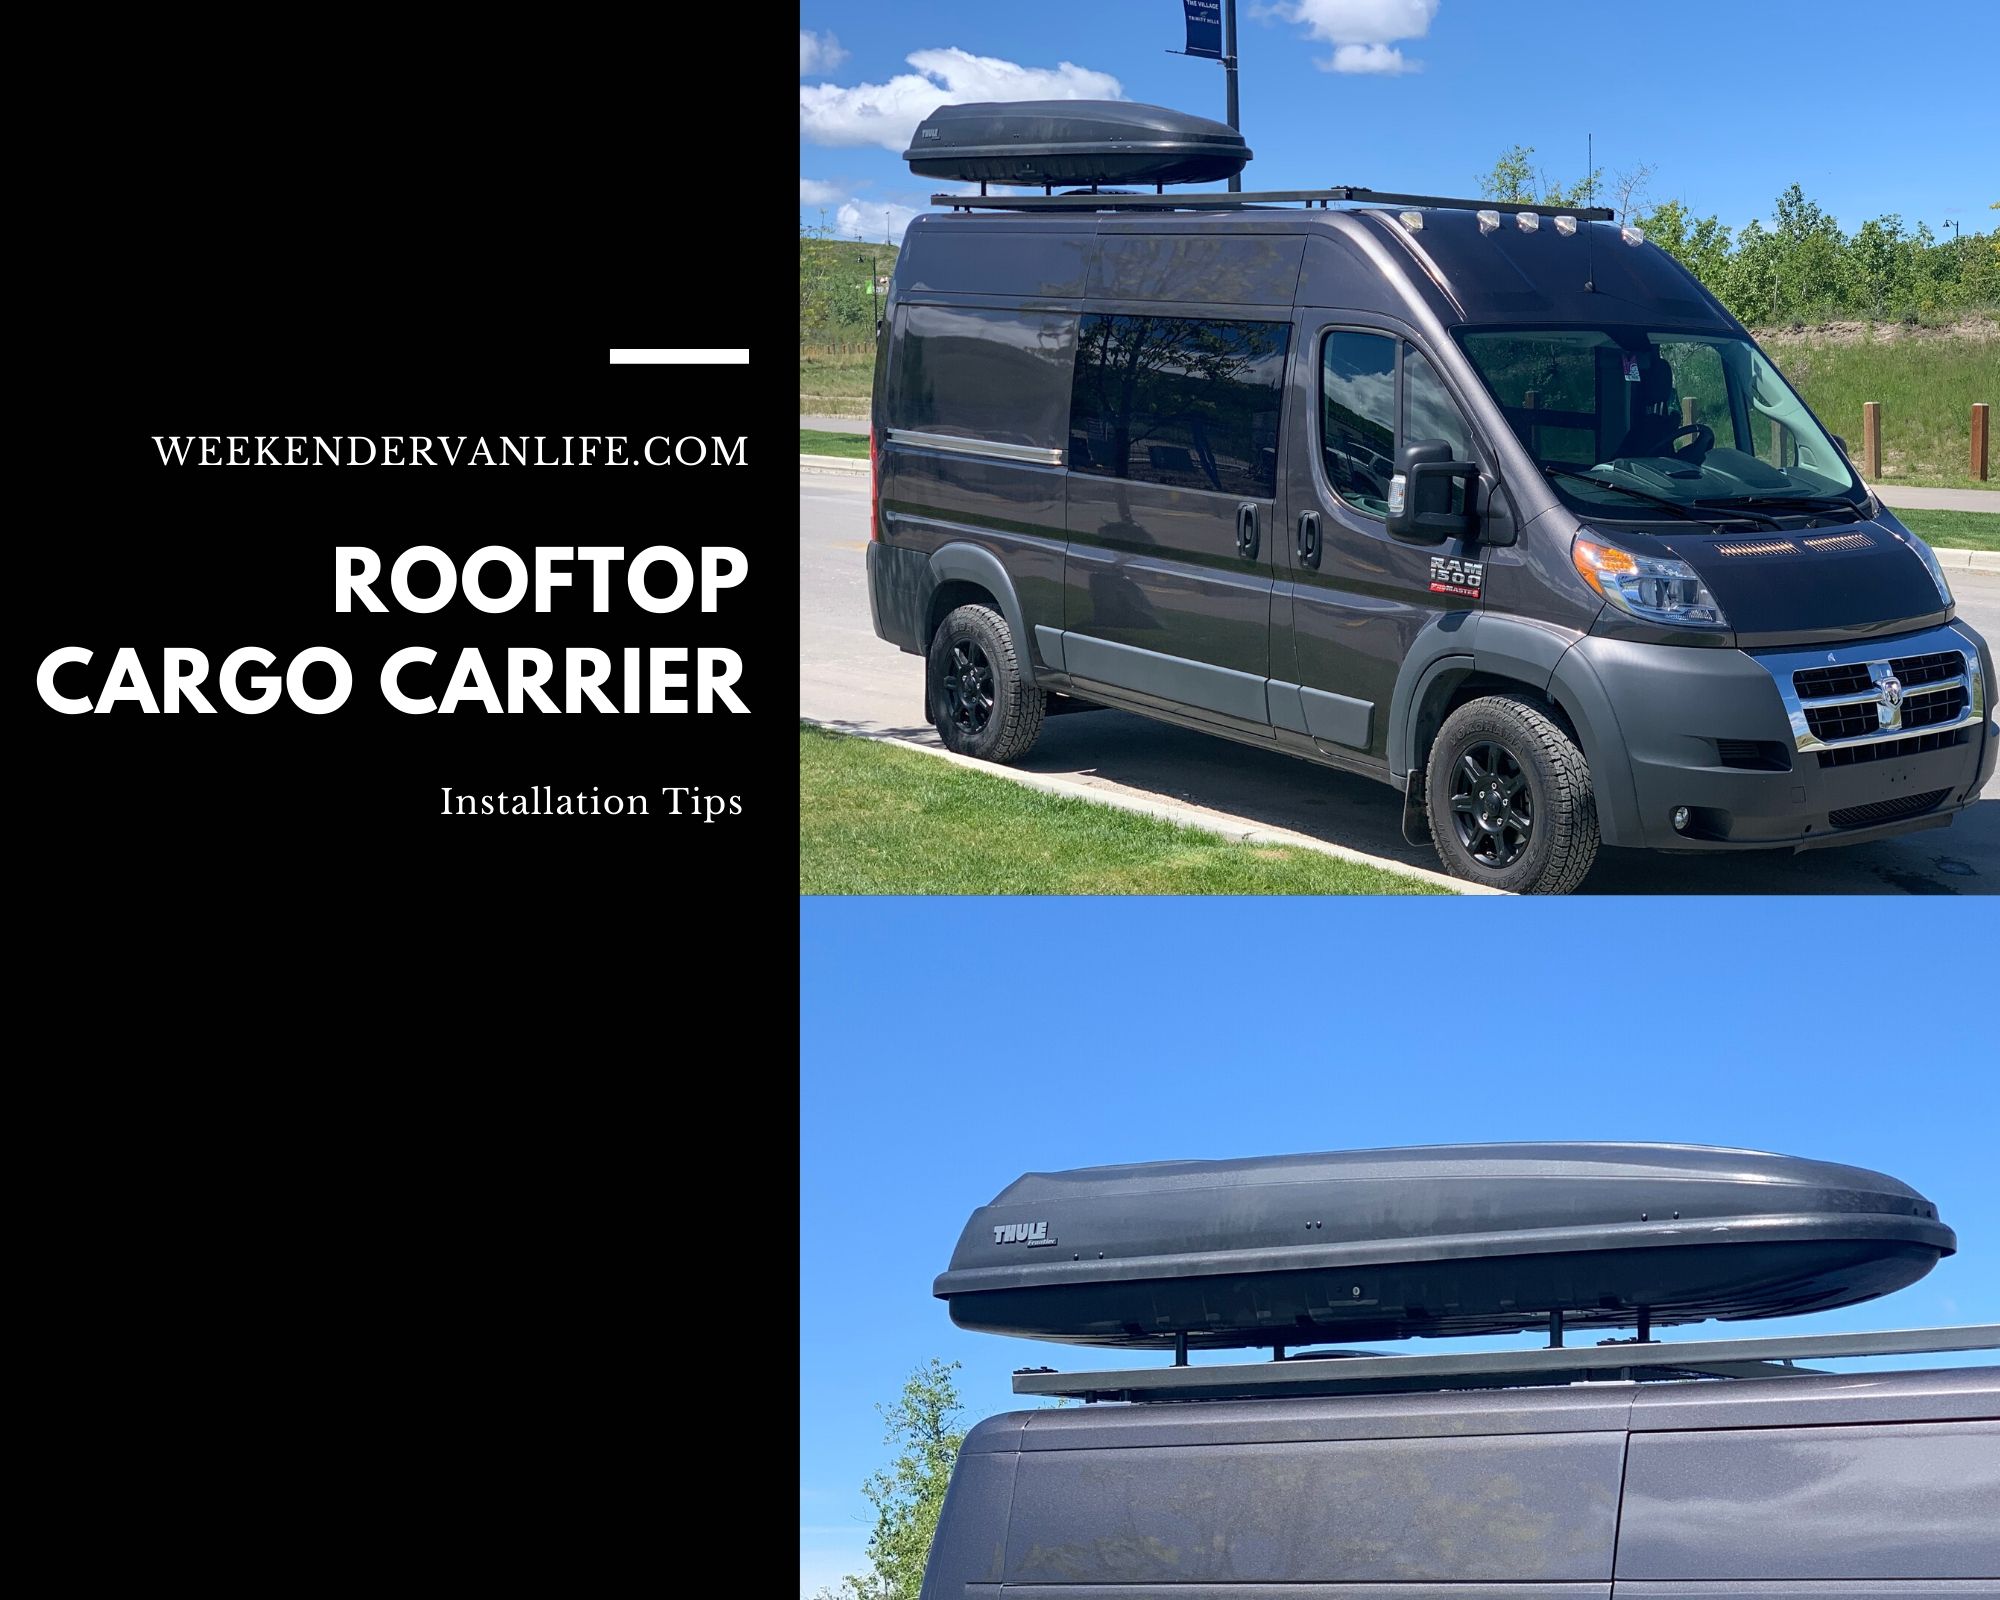 https://weekendervanlife.com/wp-content/uploads/2020/06/Rooftop-Cargo-Carrier.jpg